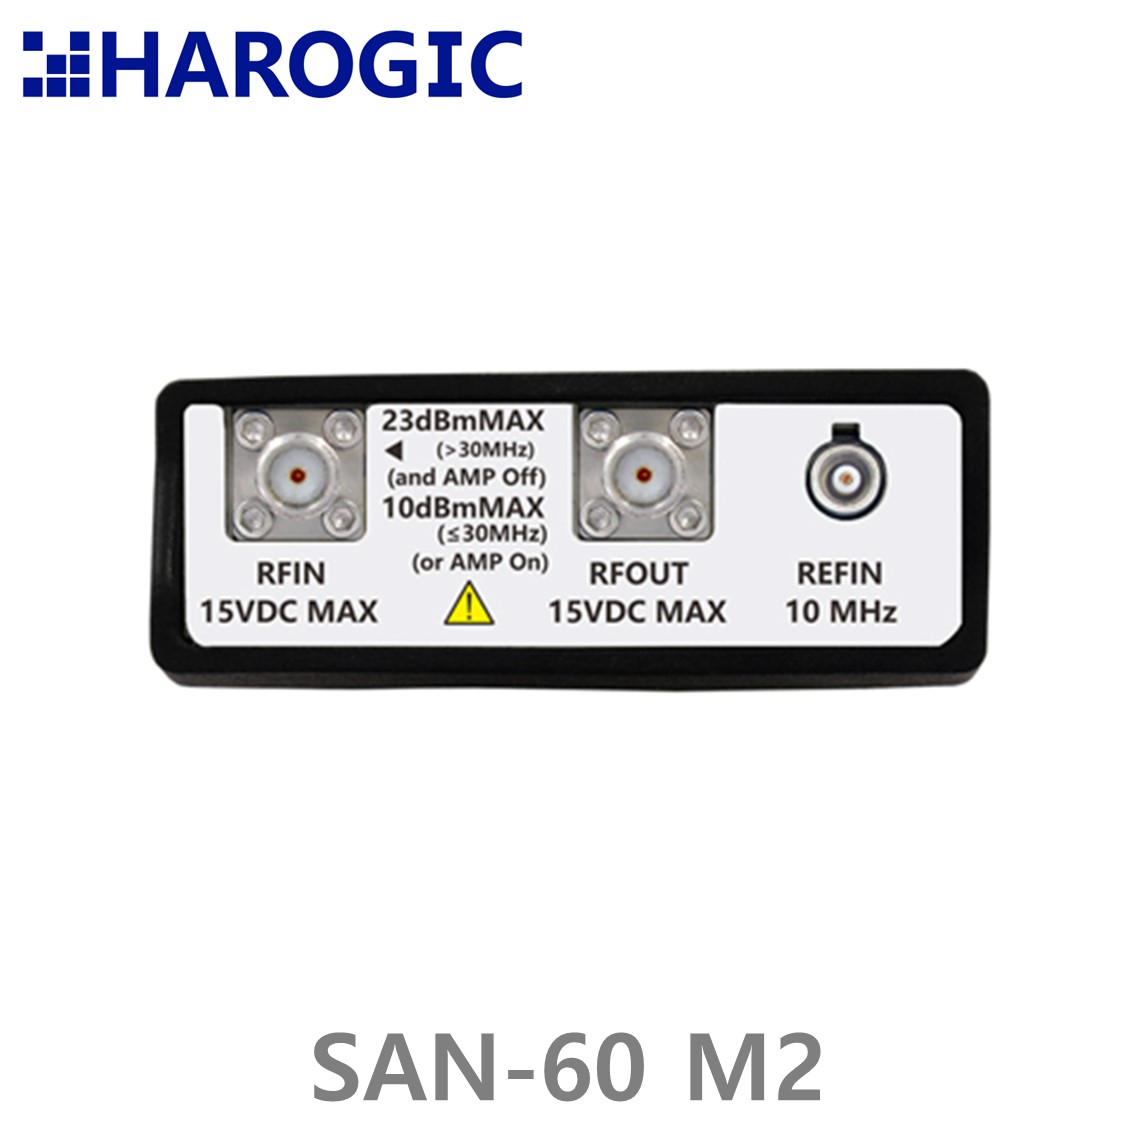 [ HAROGIC ] SAN-60 M2, USB 초소형 리얼타임 스펙트럼분석기 9 kHz - 6.3 GHz, 25MHz 대역폭, 100GHz/s sweep speed, USB3.0